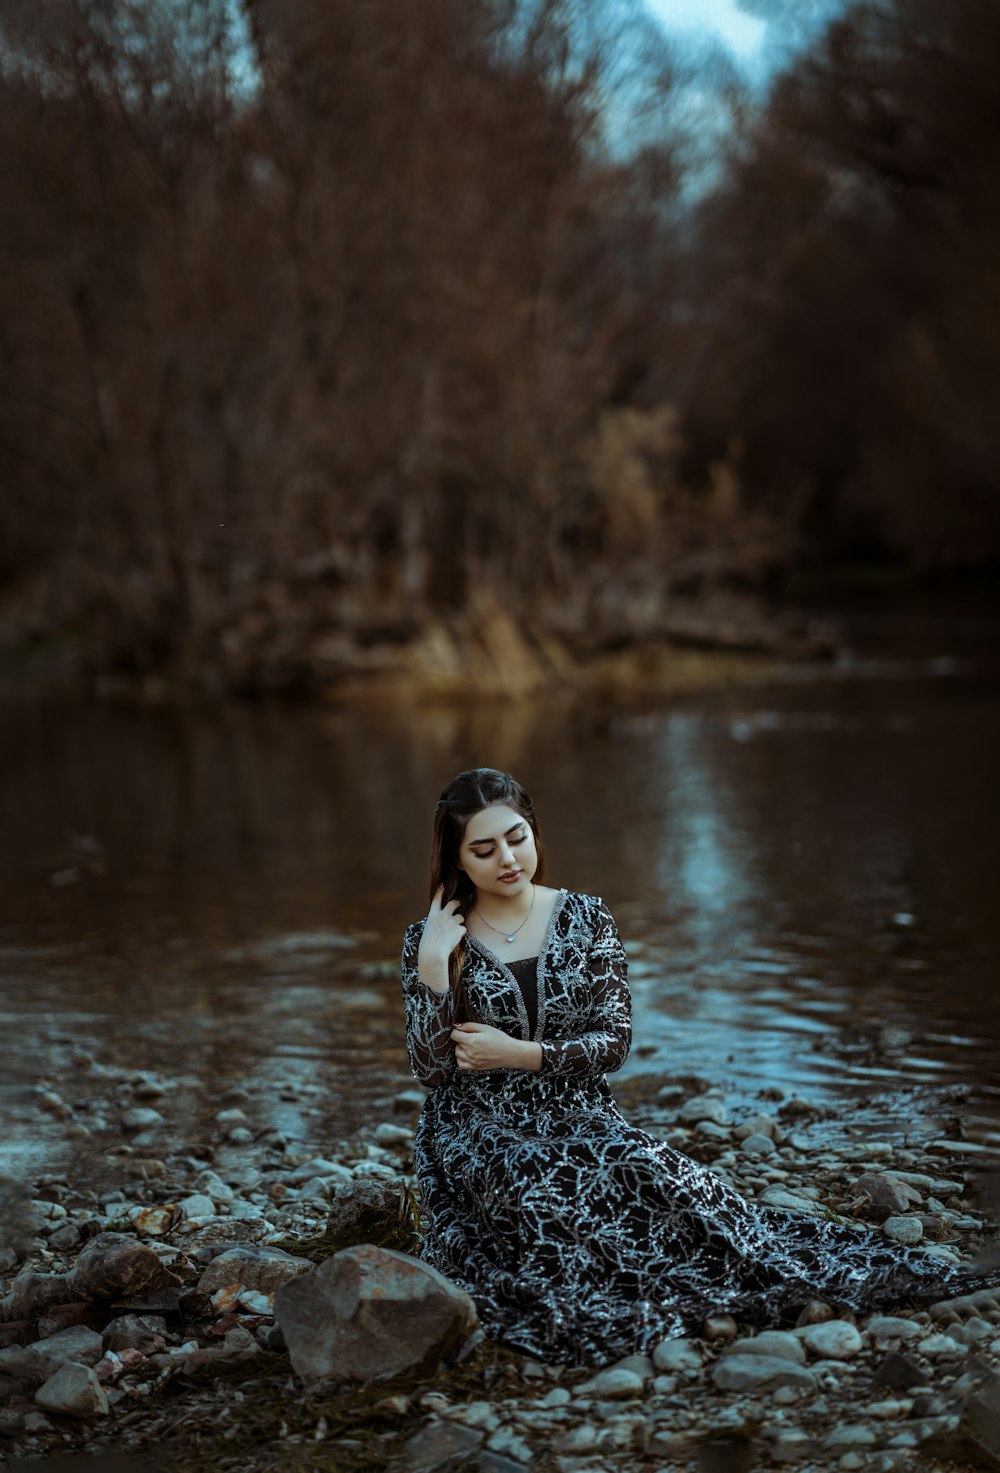 a woman in a dress sitting on rocks near a river